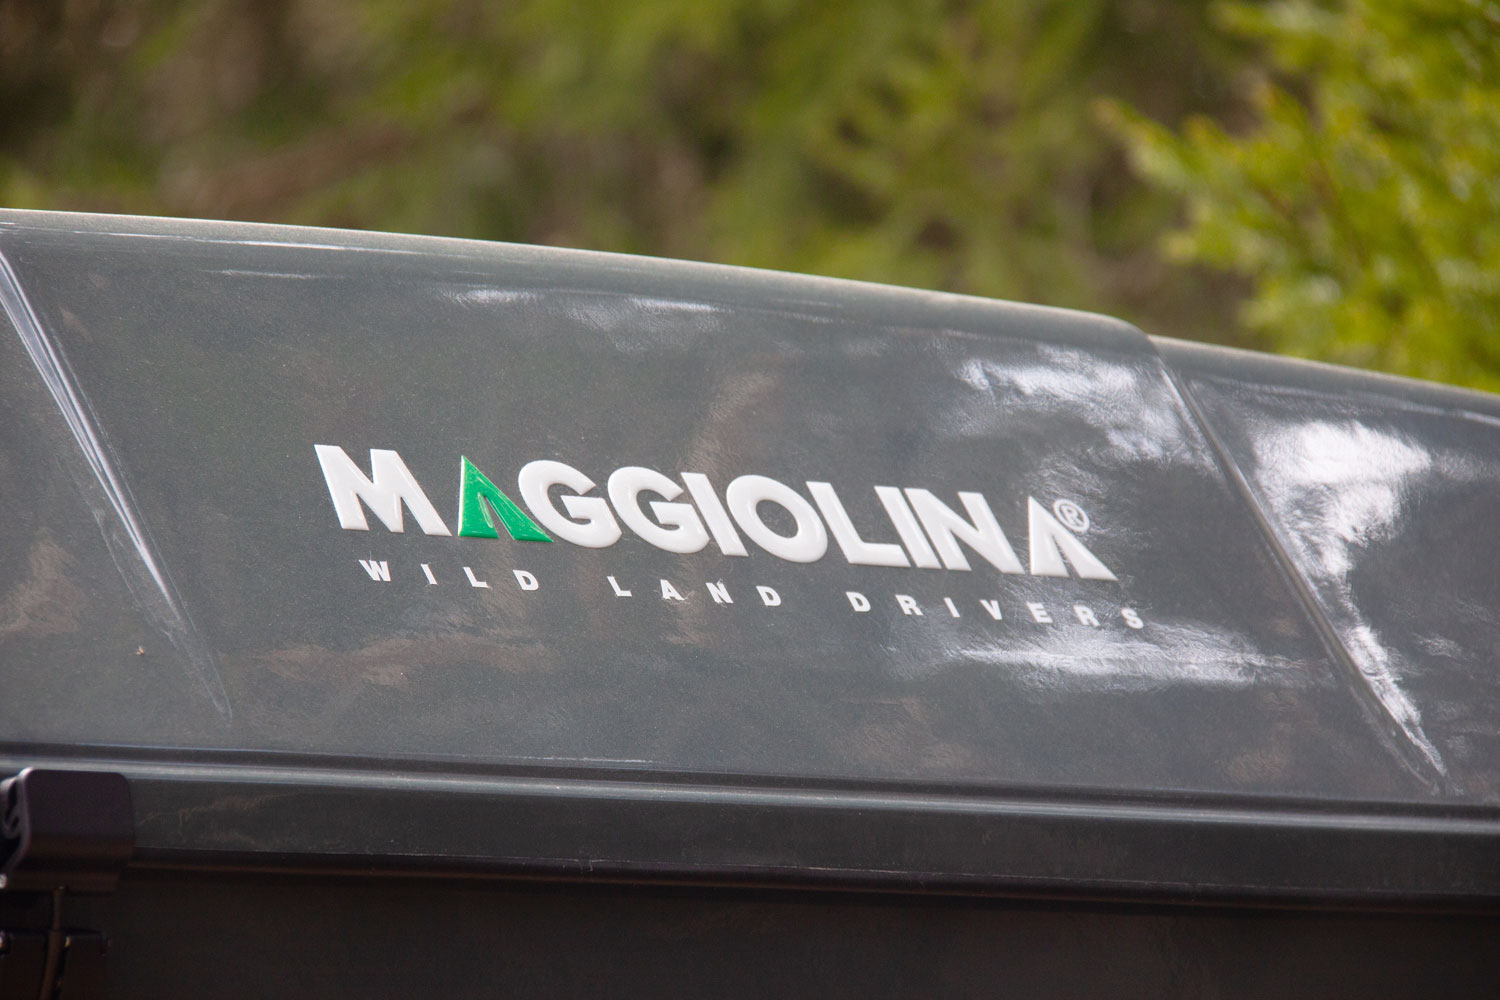 Maggiolina WILD LAND DRIVERS Grand Tour Extreme 360°